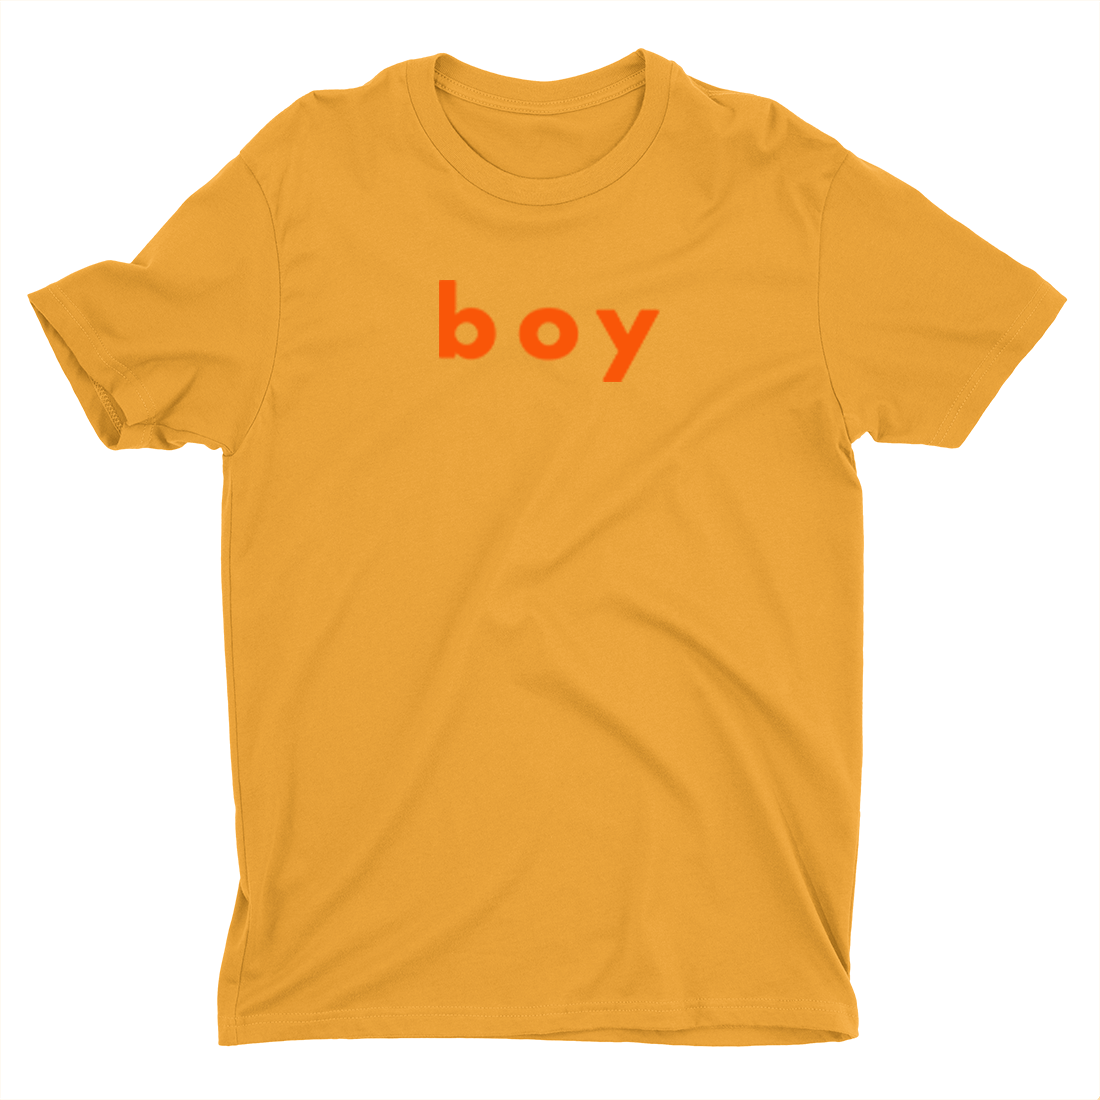 The Killers - Gold  "boy" T-Shirt